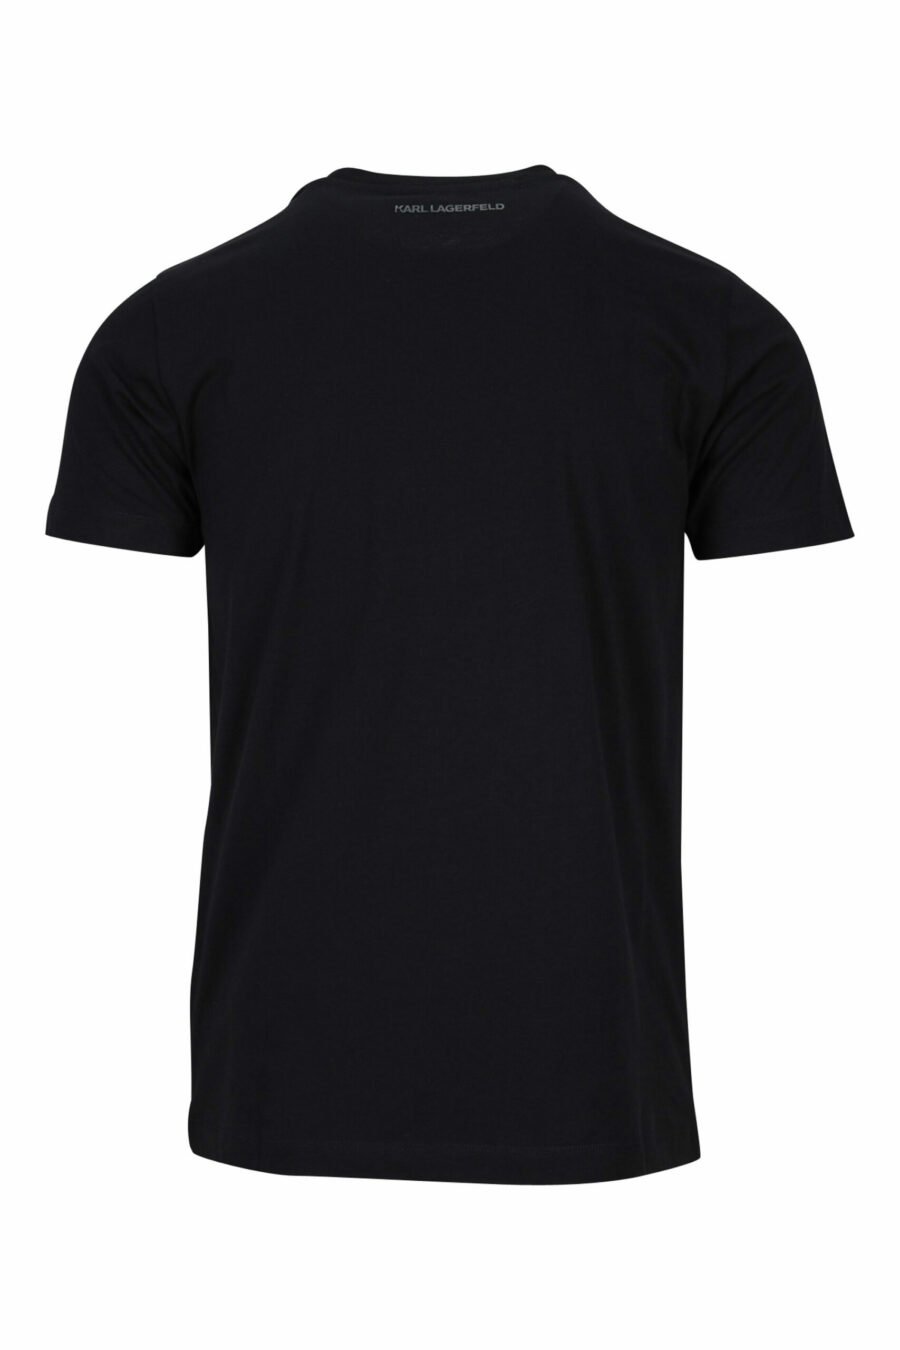 T-shirt preta com maxilogo de borracha monocromático - 4062226679480 1 à escala